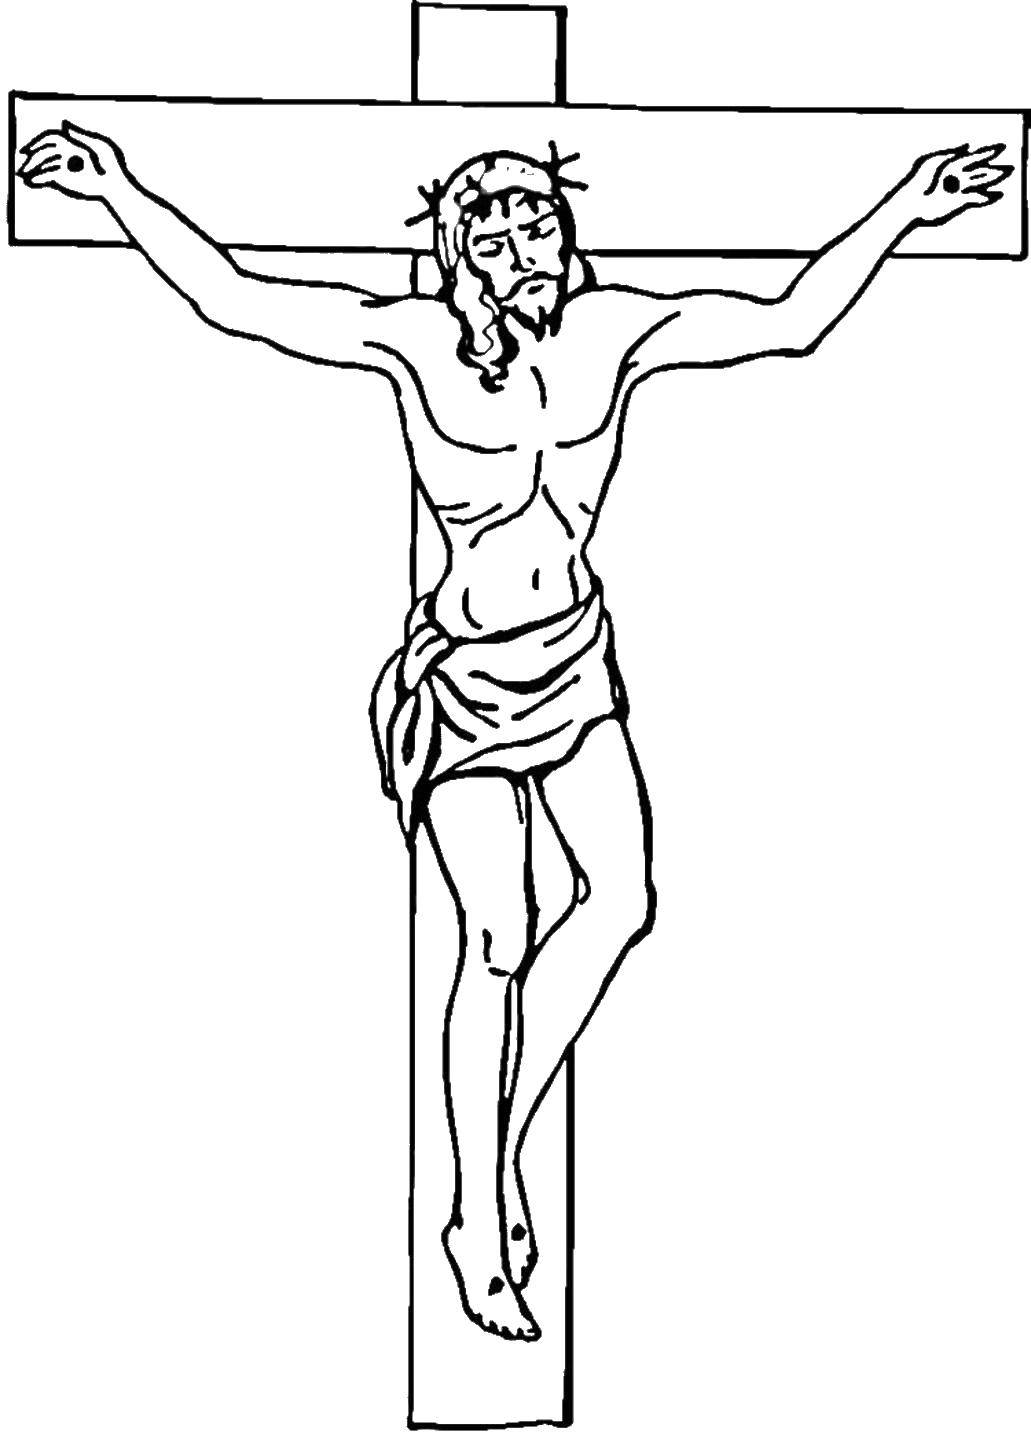 Название: Раскраска Иисус на кресте. Категория: Крест. Теги: религия.